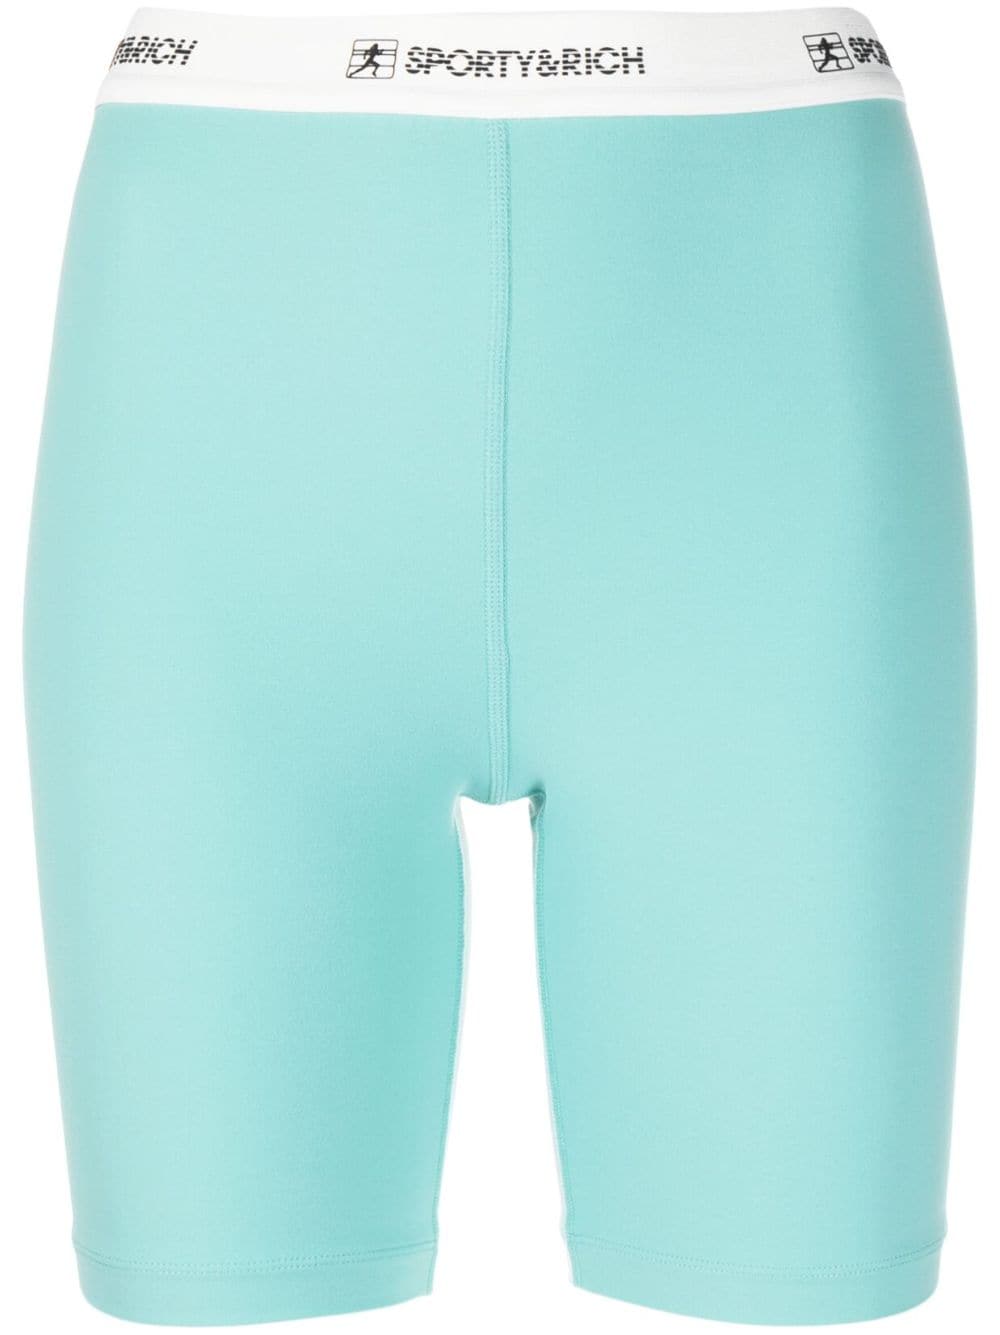 Shorts con logo in celeste - donna SPORTY & RICH | SH835PA